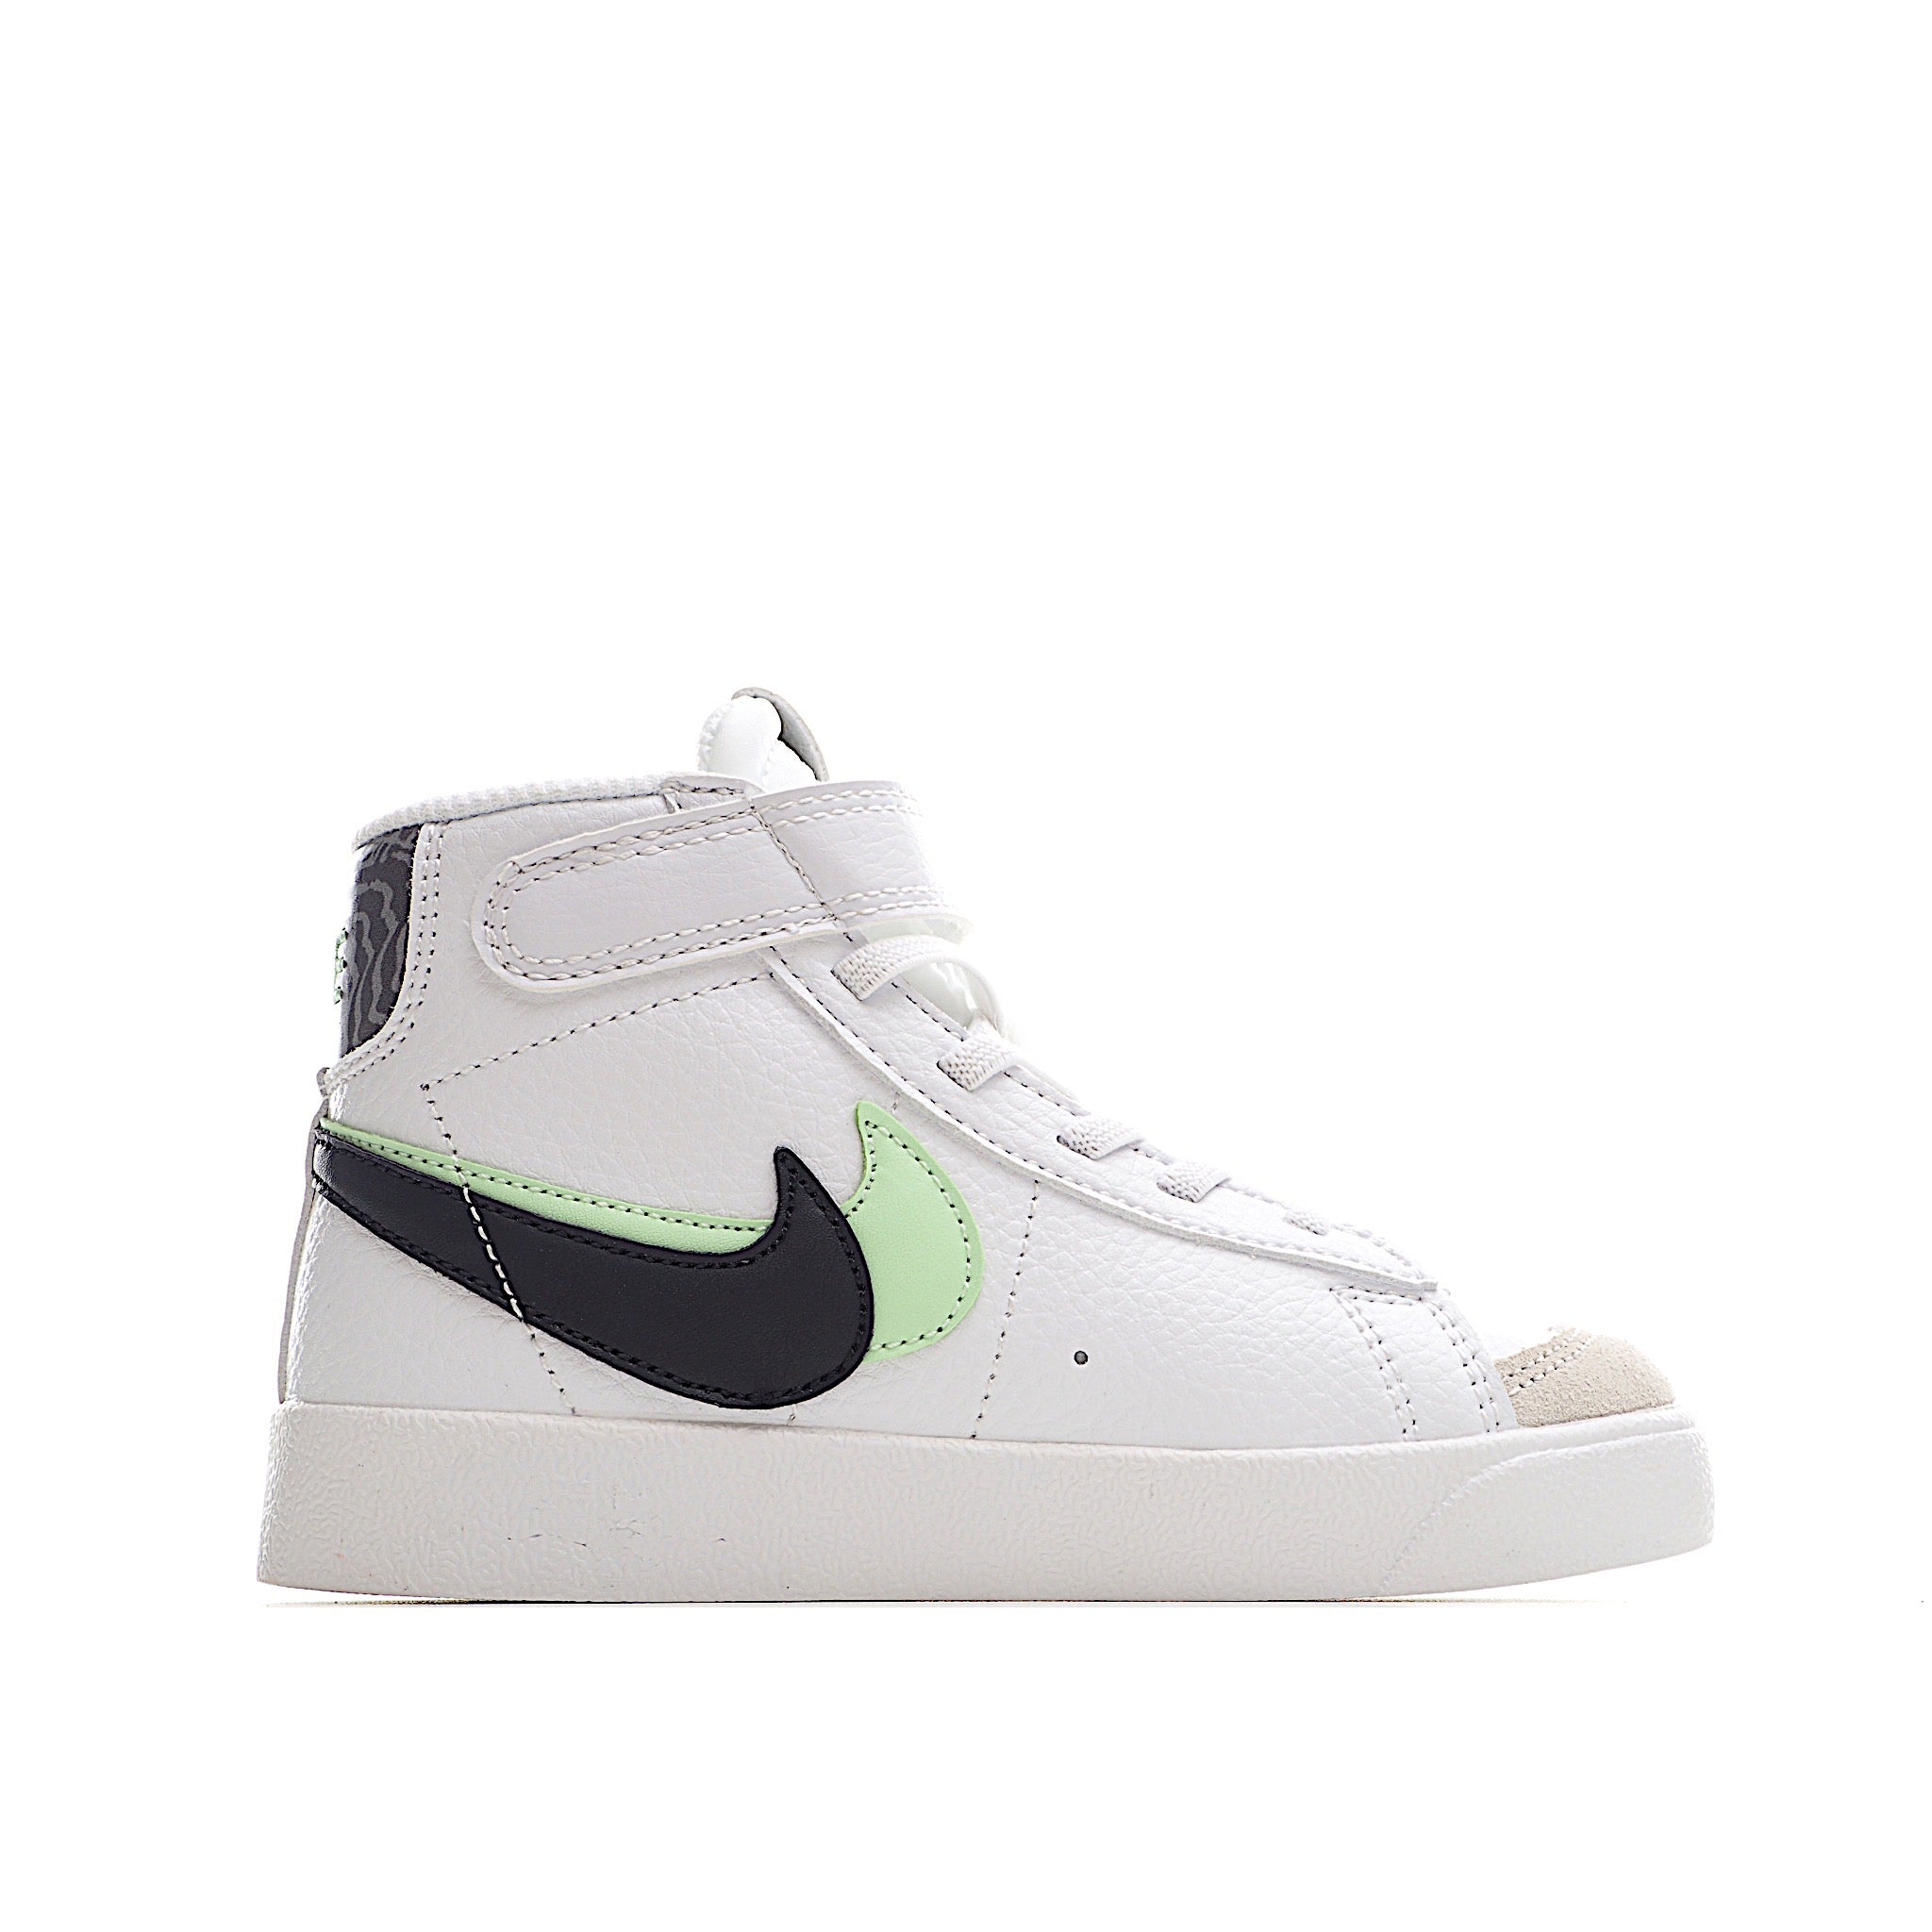 Nike high blazer black and green  shoes